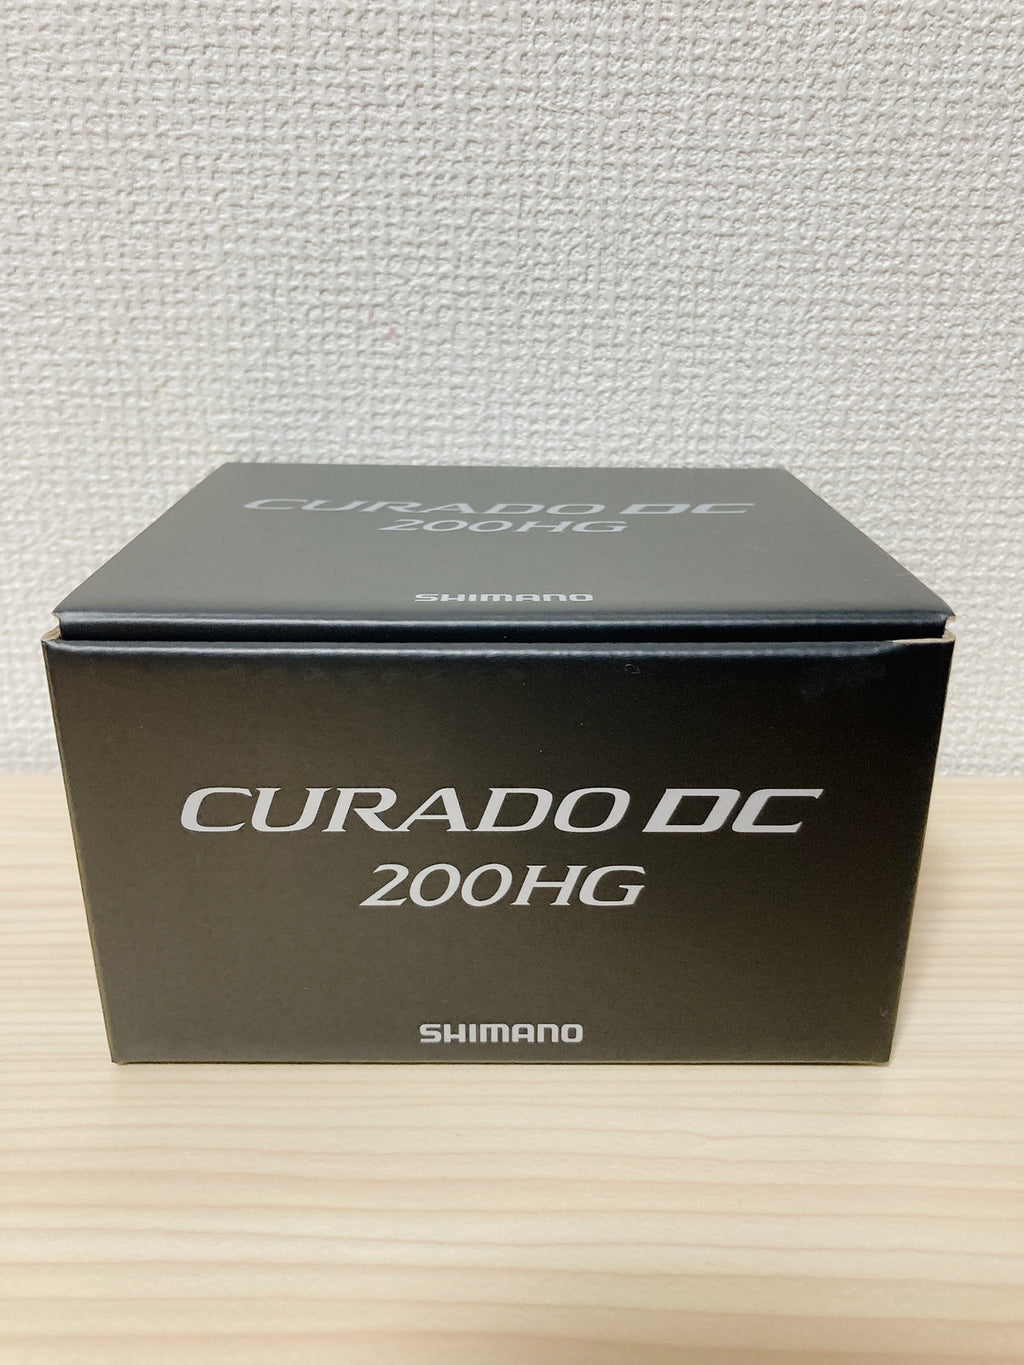 Shimano Curado DC 200 HG Baitcasting Reel, 7.4:1 Gear Ratio, Right Hand -  730461, Baitcasting Reels at Sportsman's Guide